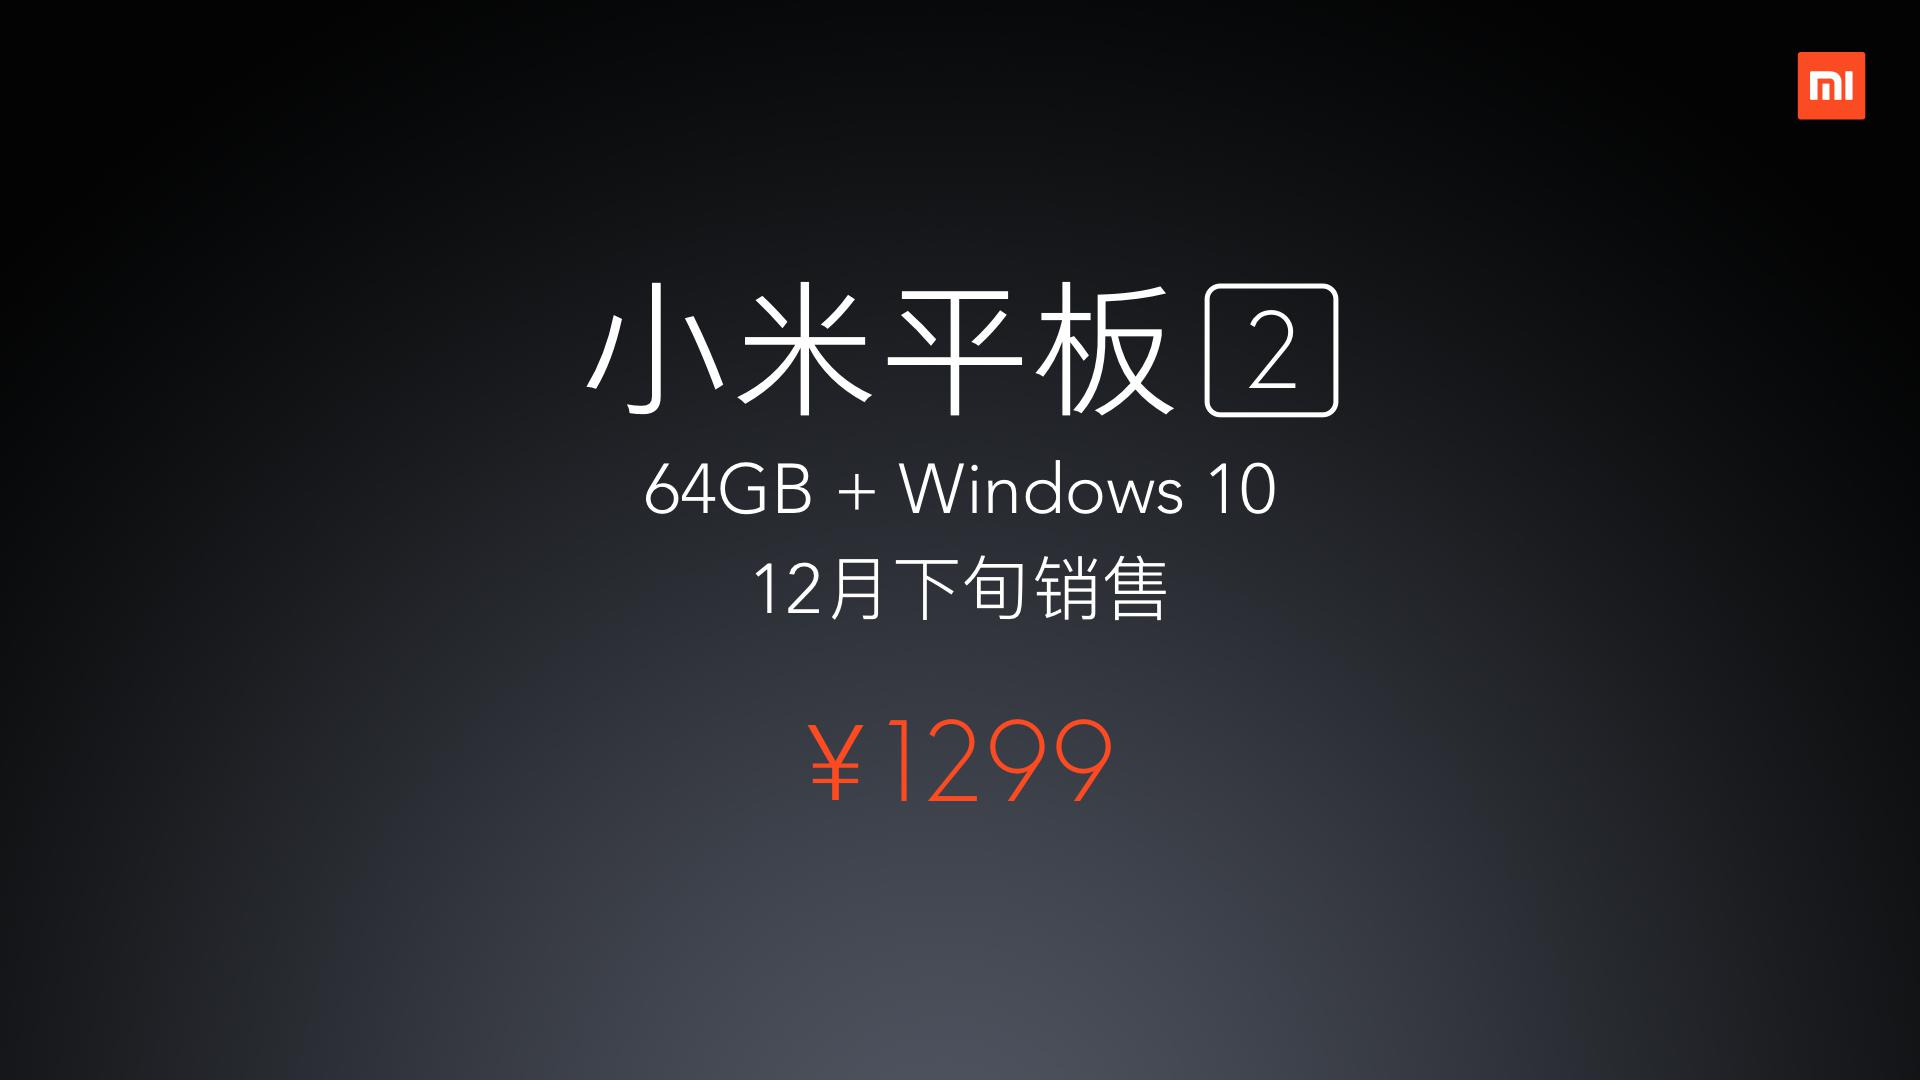 MIUI 7\/ Windows 10双版本 小米平板2售999元